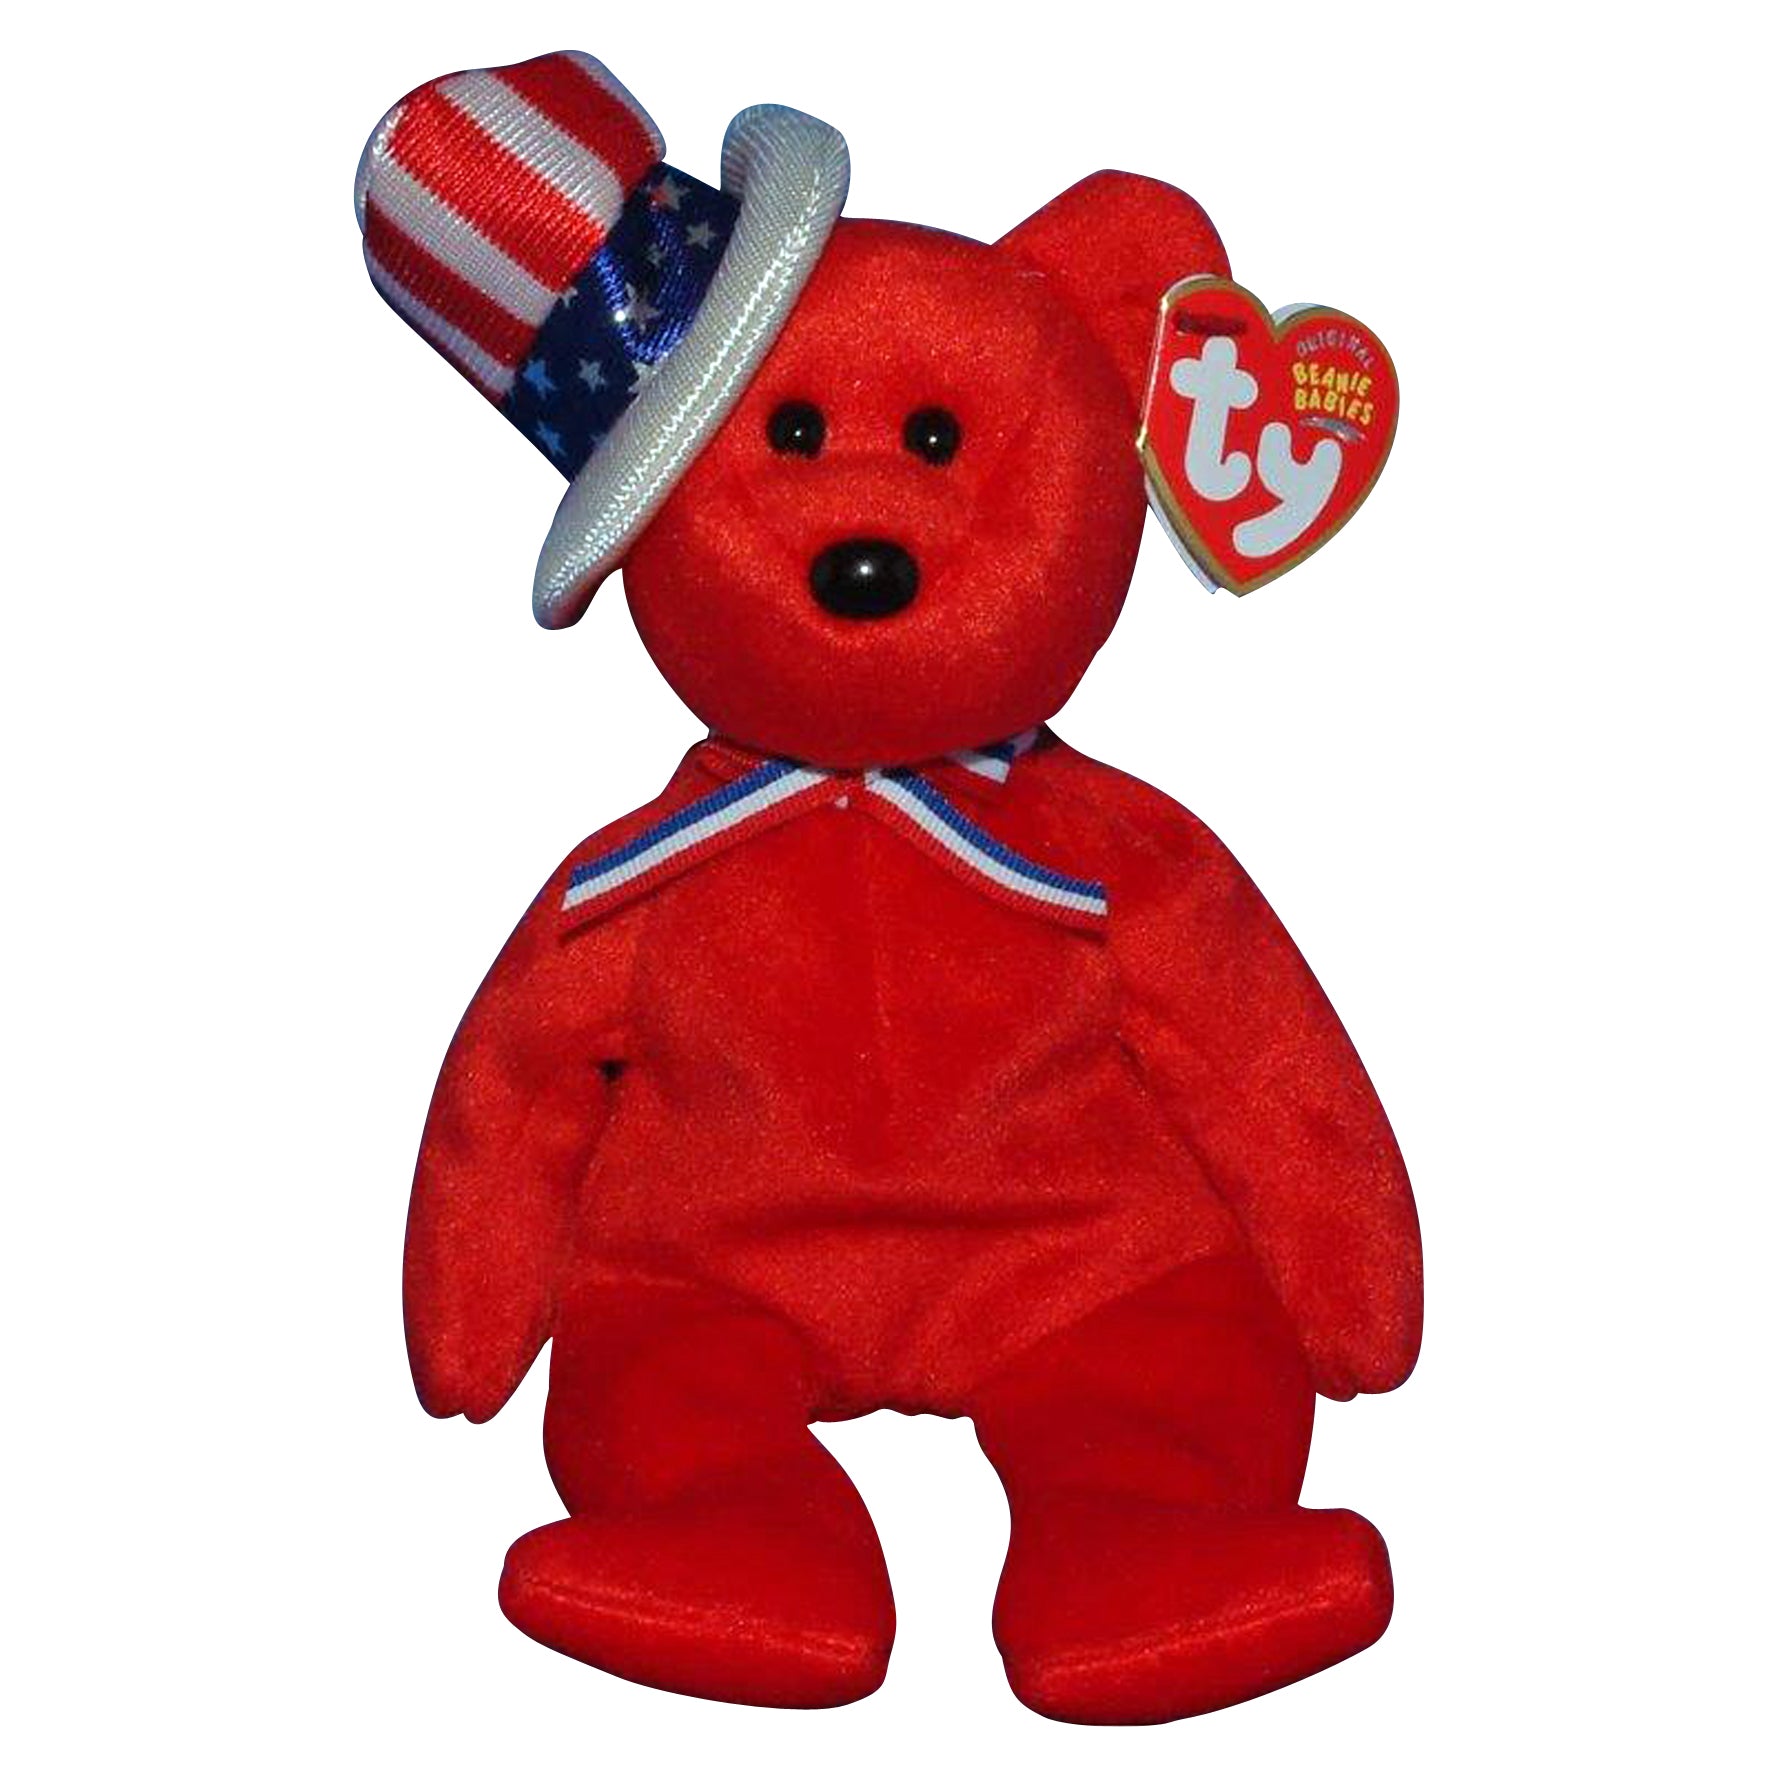 Ty Beanie Baby: Sam the Bear - Red